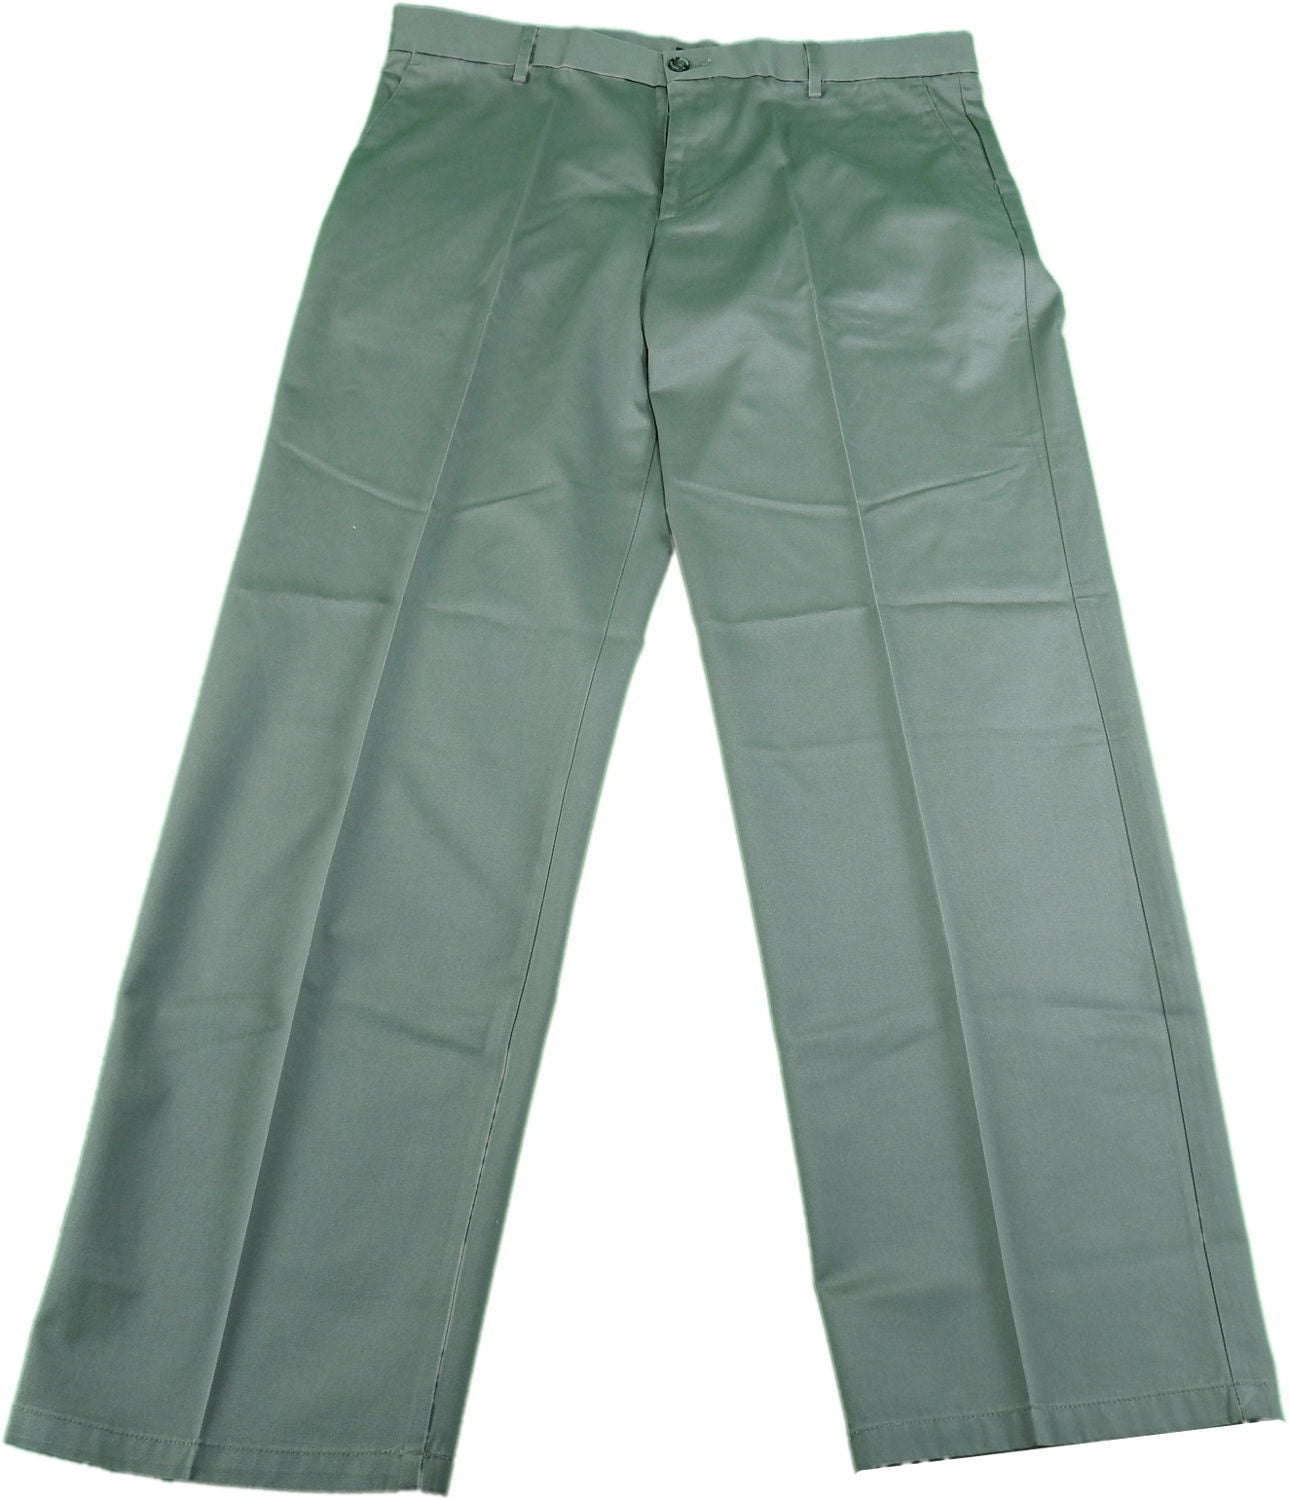 Dockers #7496 NEW Men's Flat Front Classic Fit Signature Khaki Pants MSRP $62 